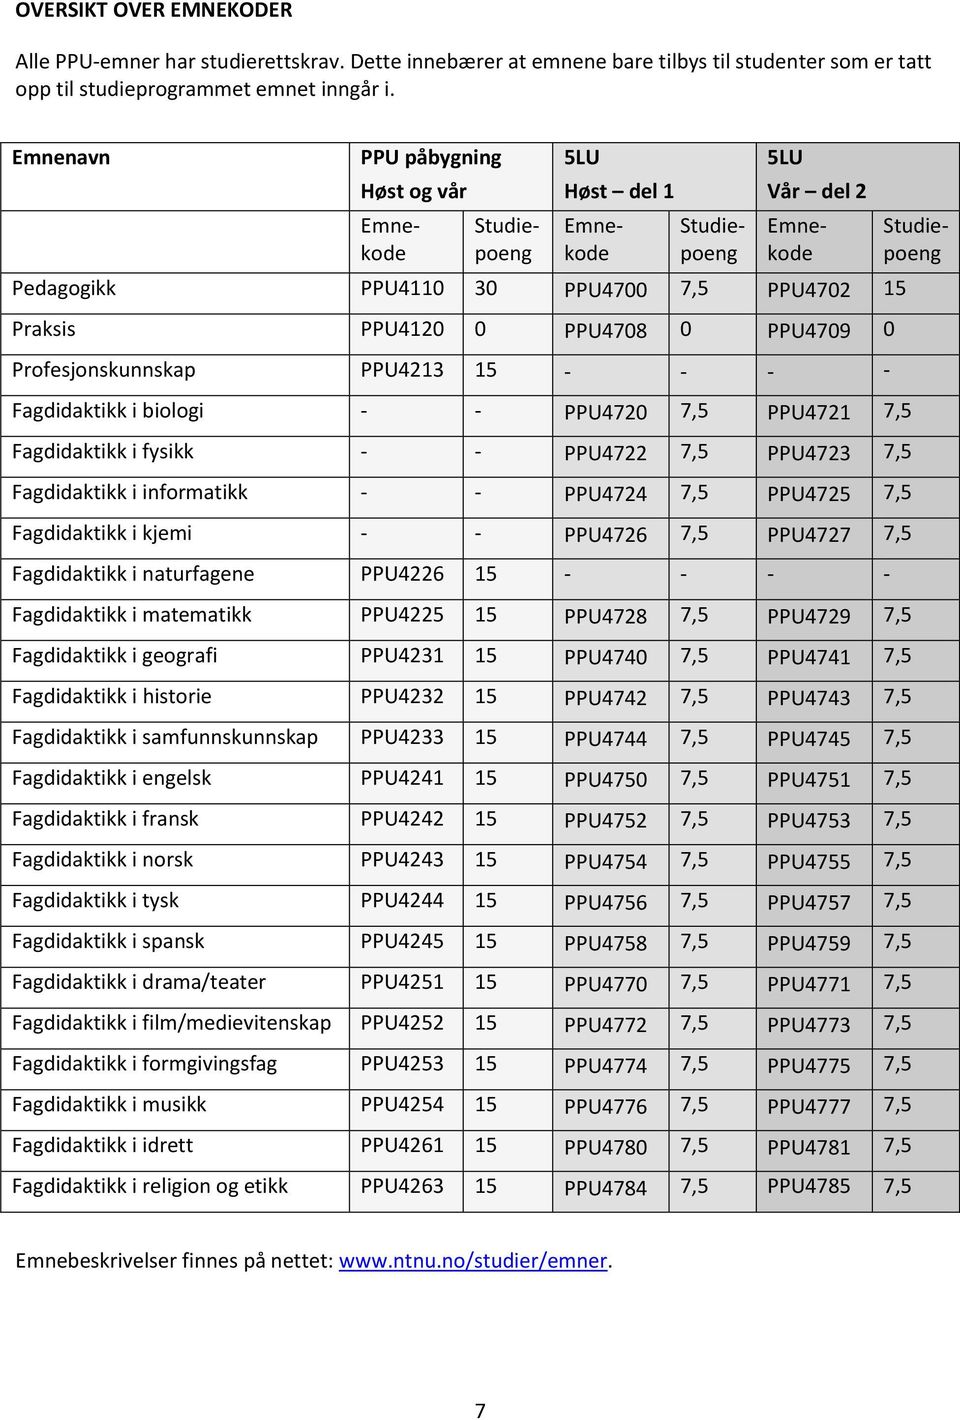 biologi - - PPU4720 7,5 PPU4721 7,5 Fagdidaktikk i fysikk - - PPU4722 7,5 PPU4723 7,5 Fagdidaktikk i informatikk - - PPU4724 7,5 PPU4725 7,5 Fagdidaktikk i kjemi - - PPU4726 7,5 PPU4727 7,5